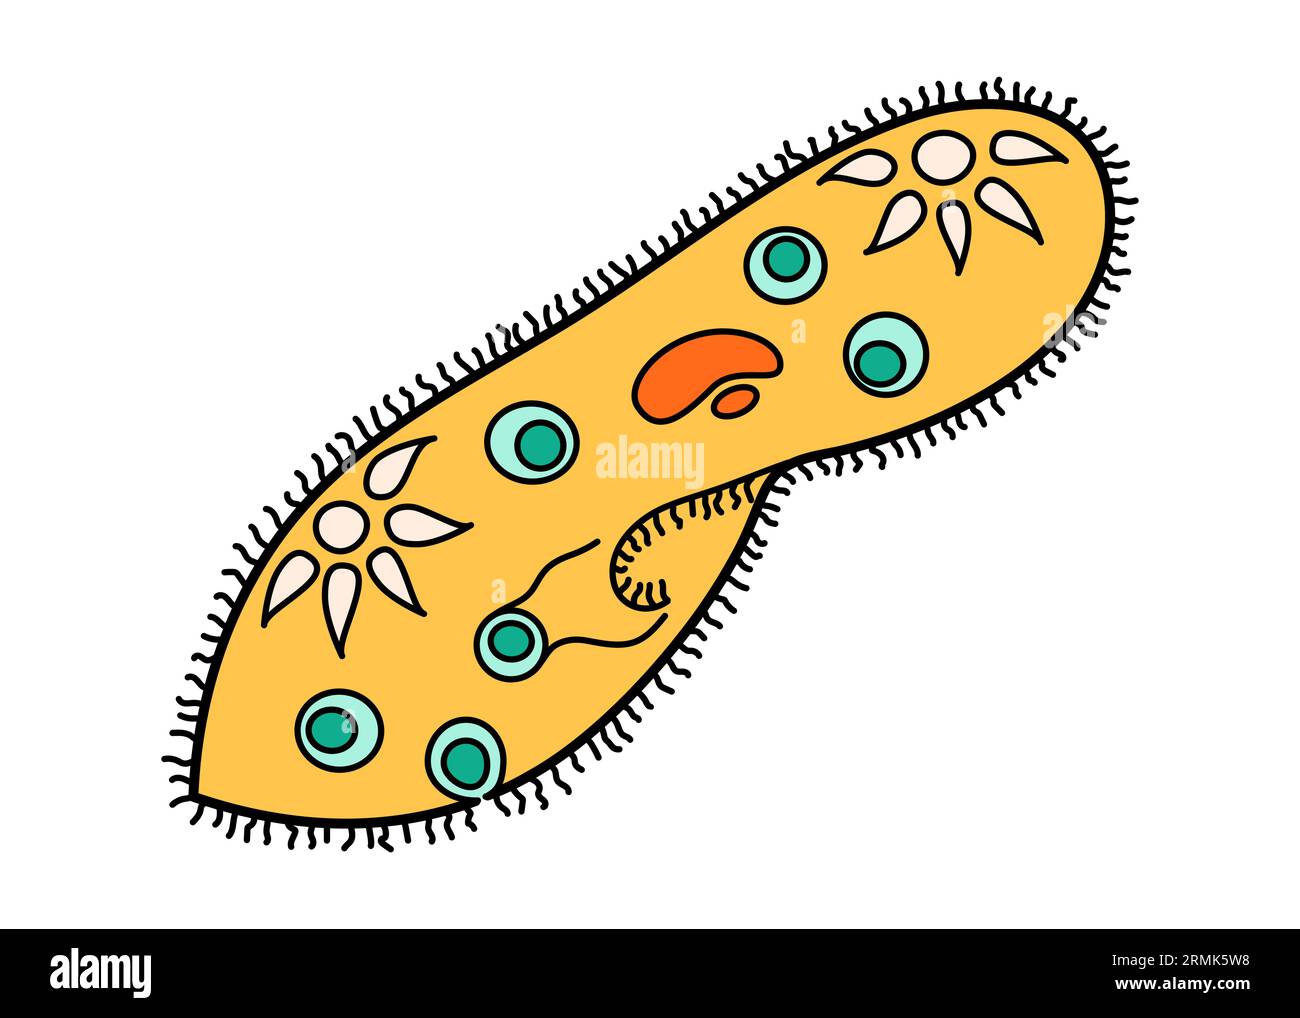 Paramecium Caudatum proteus science icon with nucleus, vacuole, contractile. Biology education laboratory cartoon protozoa organism. Bold bright Stock Vector